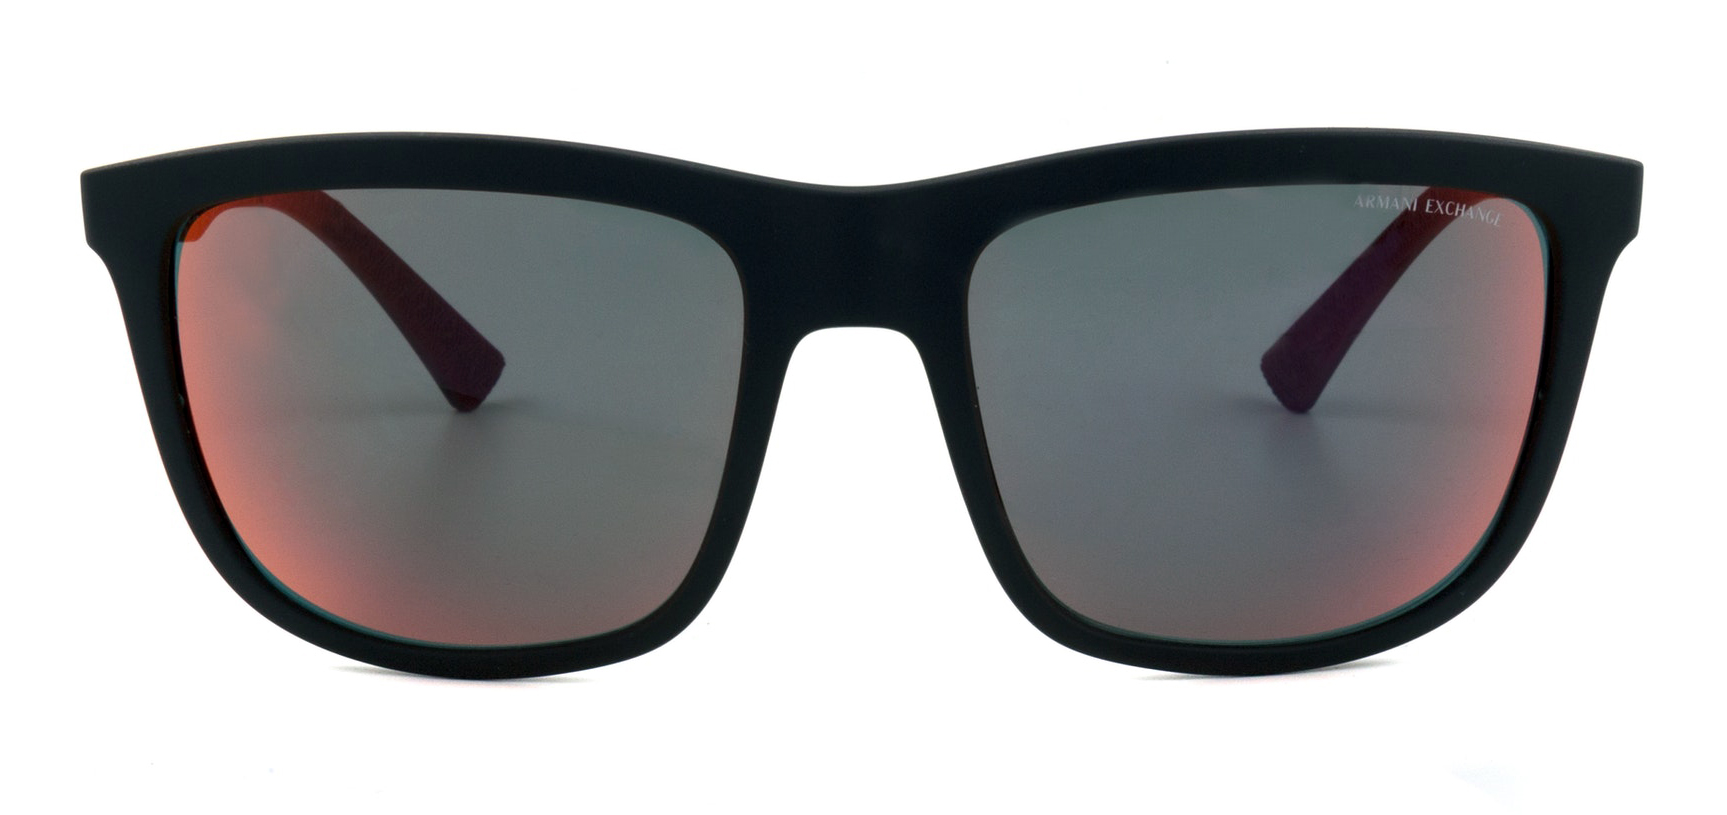 ax sunglasses